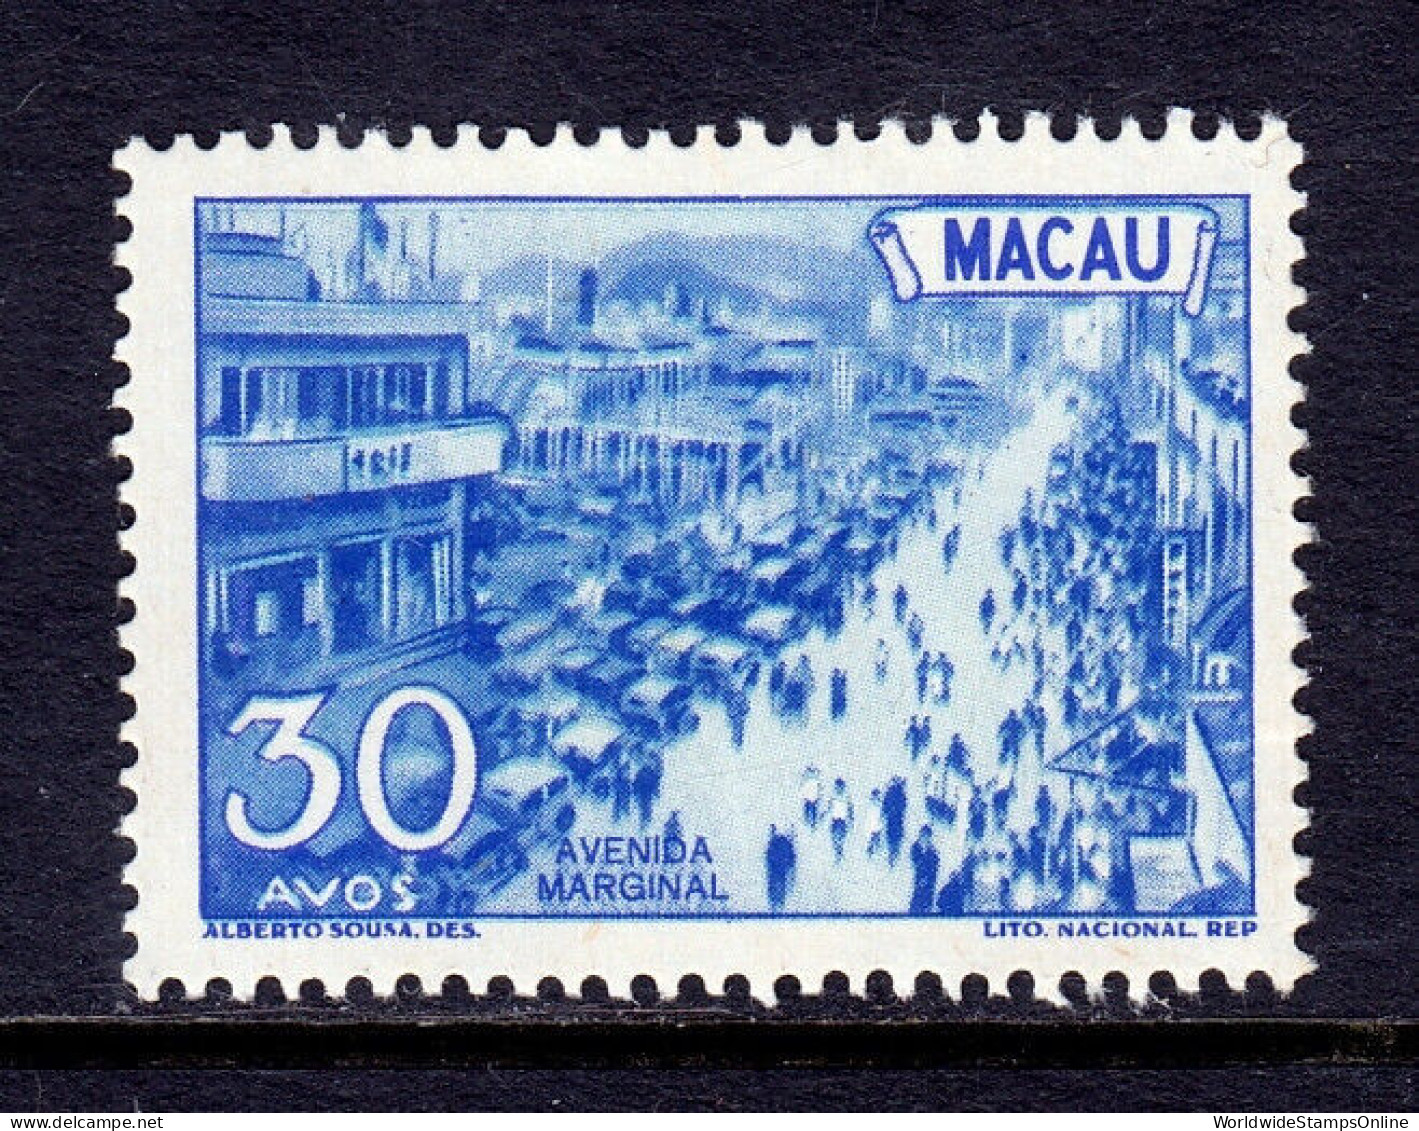 MACAO — SCOTT 346 —  1950 30a MARGINAL AVE PICTORIAL — MH — SCV $28 - Neufs